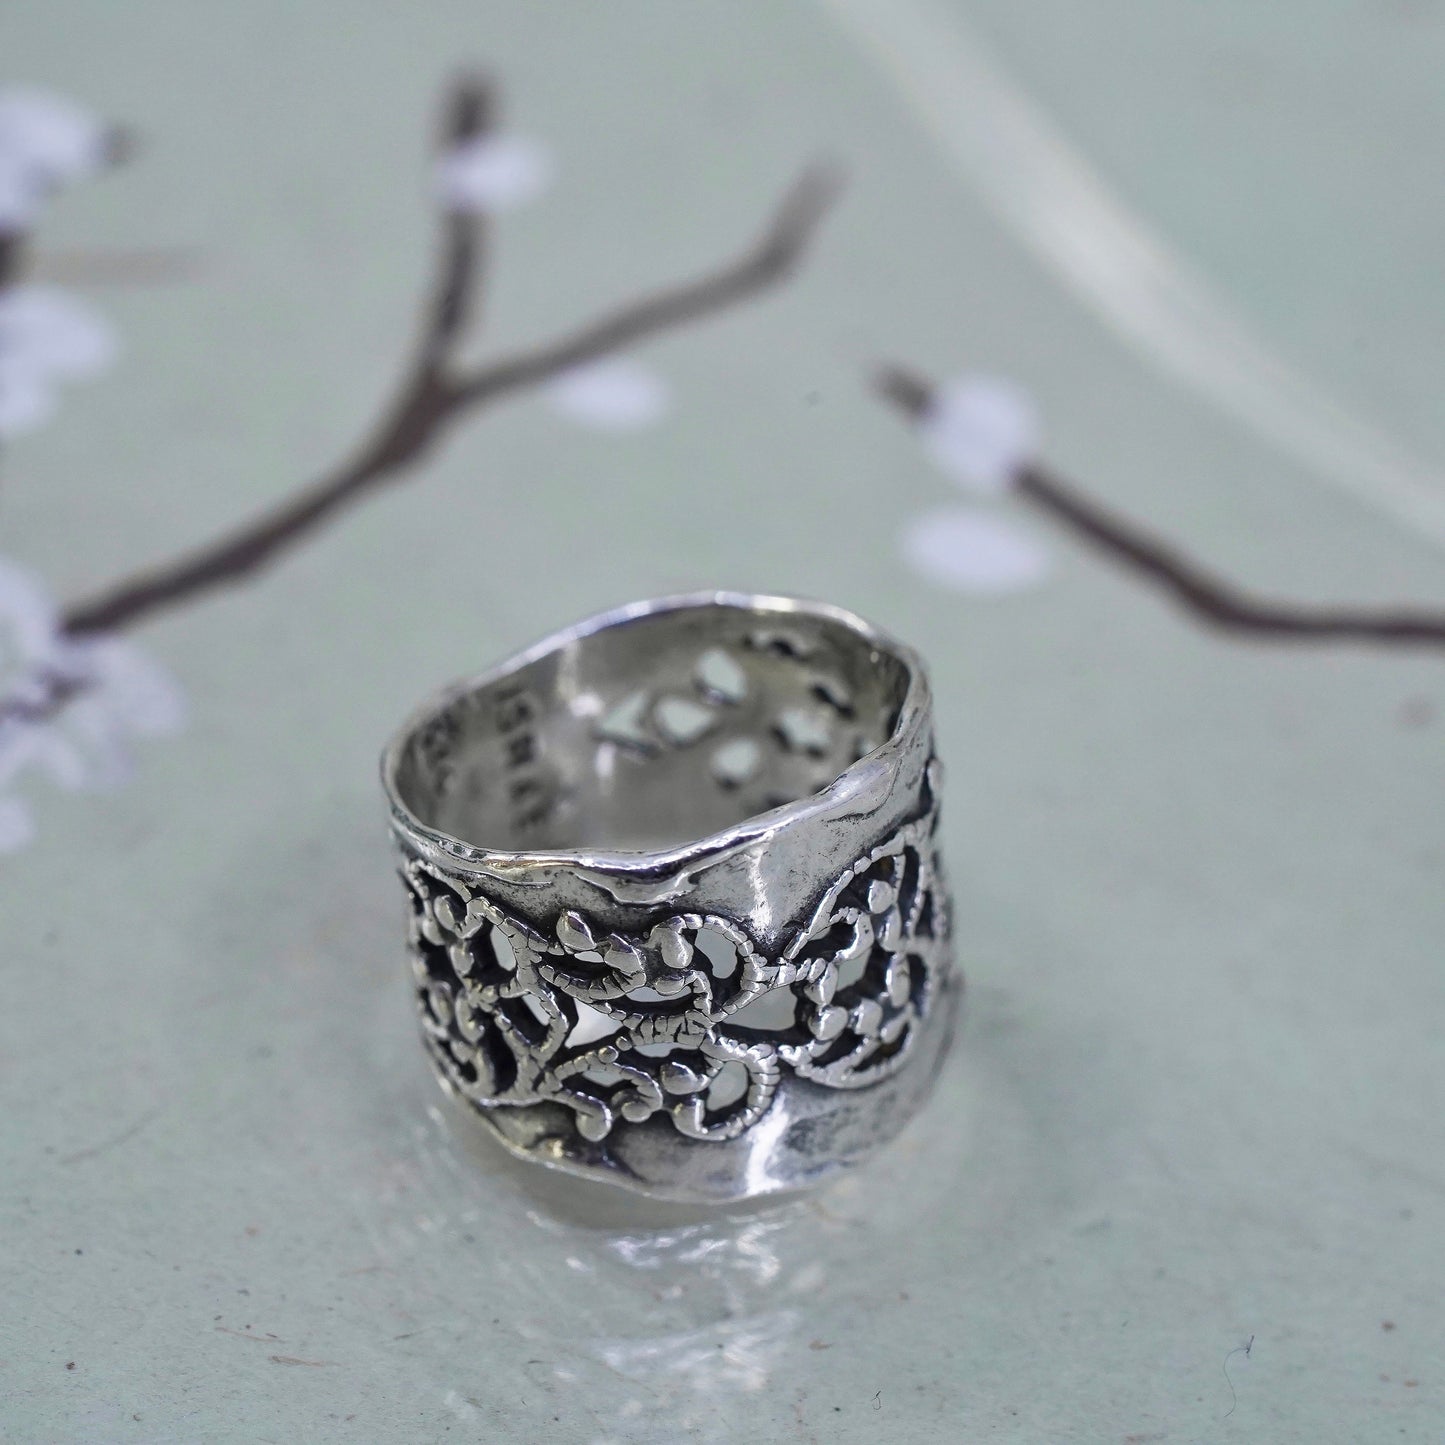 Size 4.25, vintage Israel Pz Or Paz Sterling silver ring, 925 wide band floral